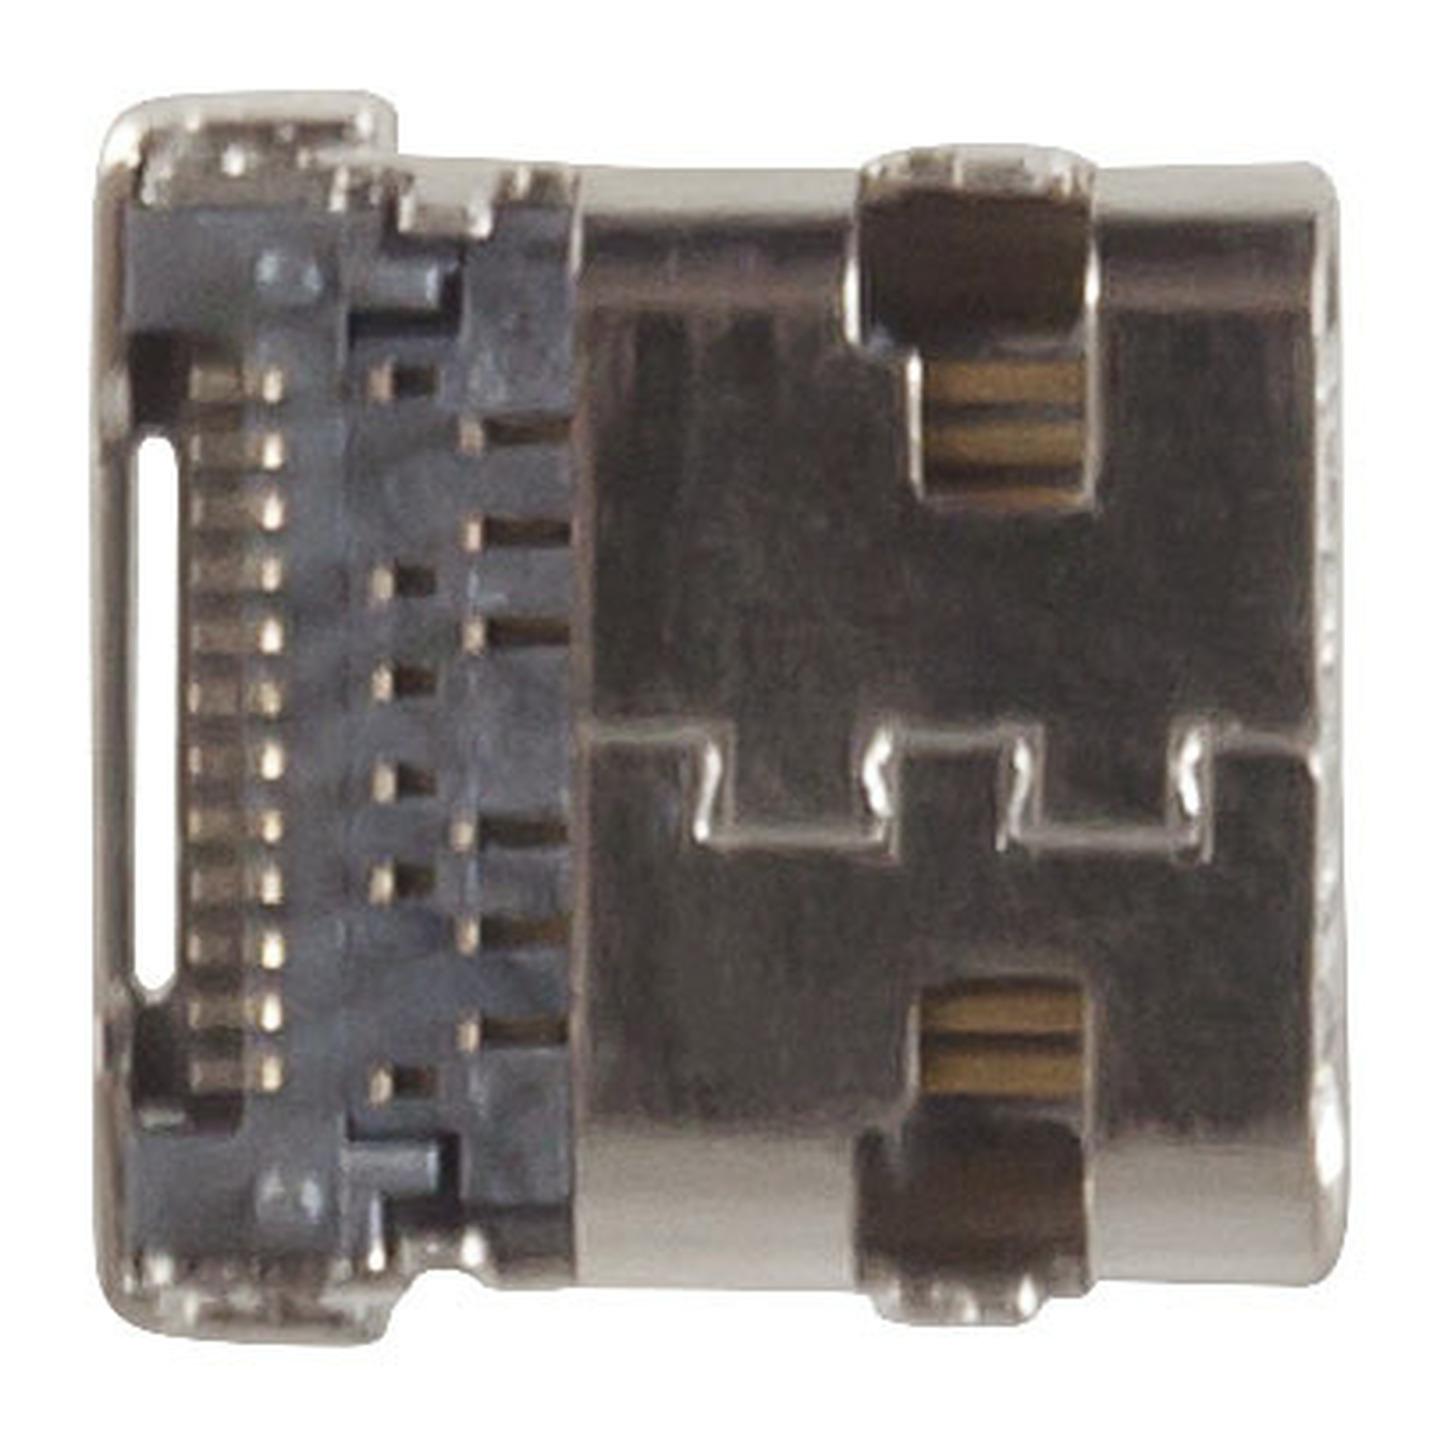 PCB Mount USB 3.1 Type C Socket